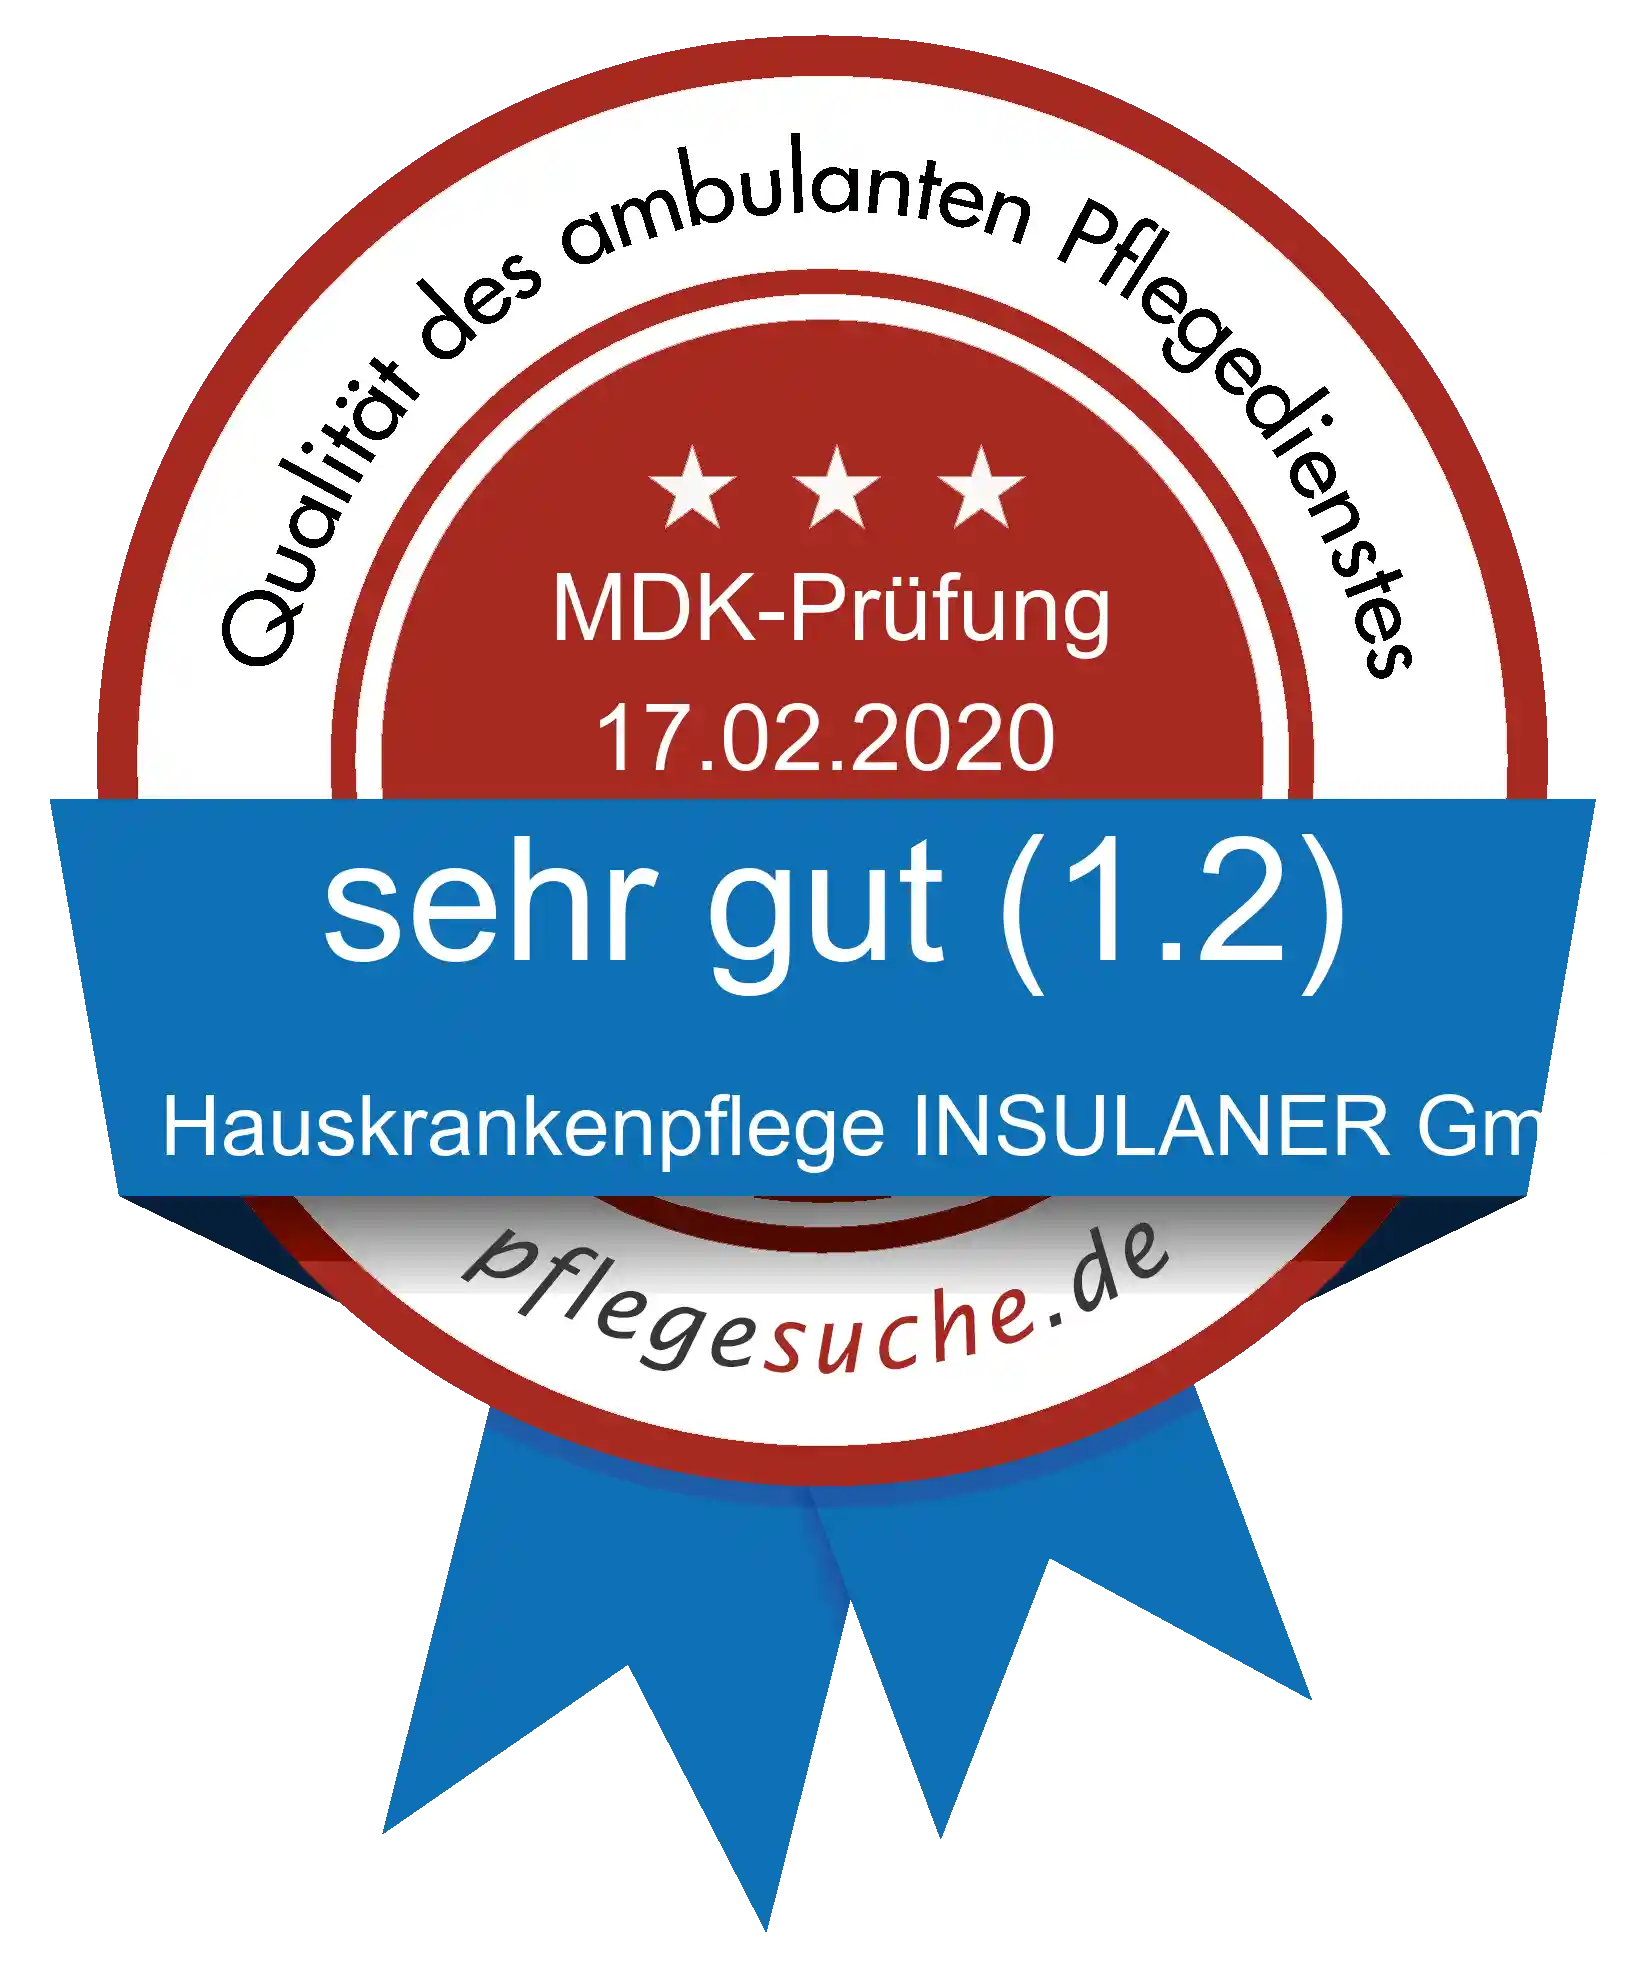 Siegel Benotung Hauskrankenpflege INSULANER GmbH